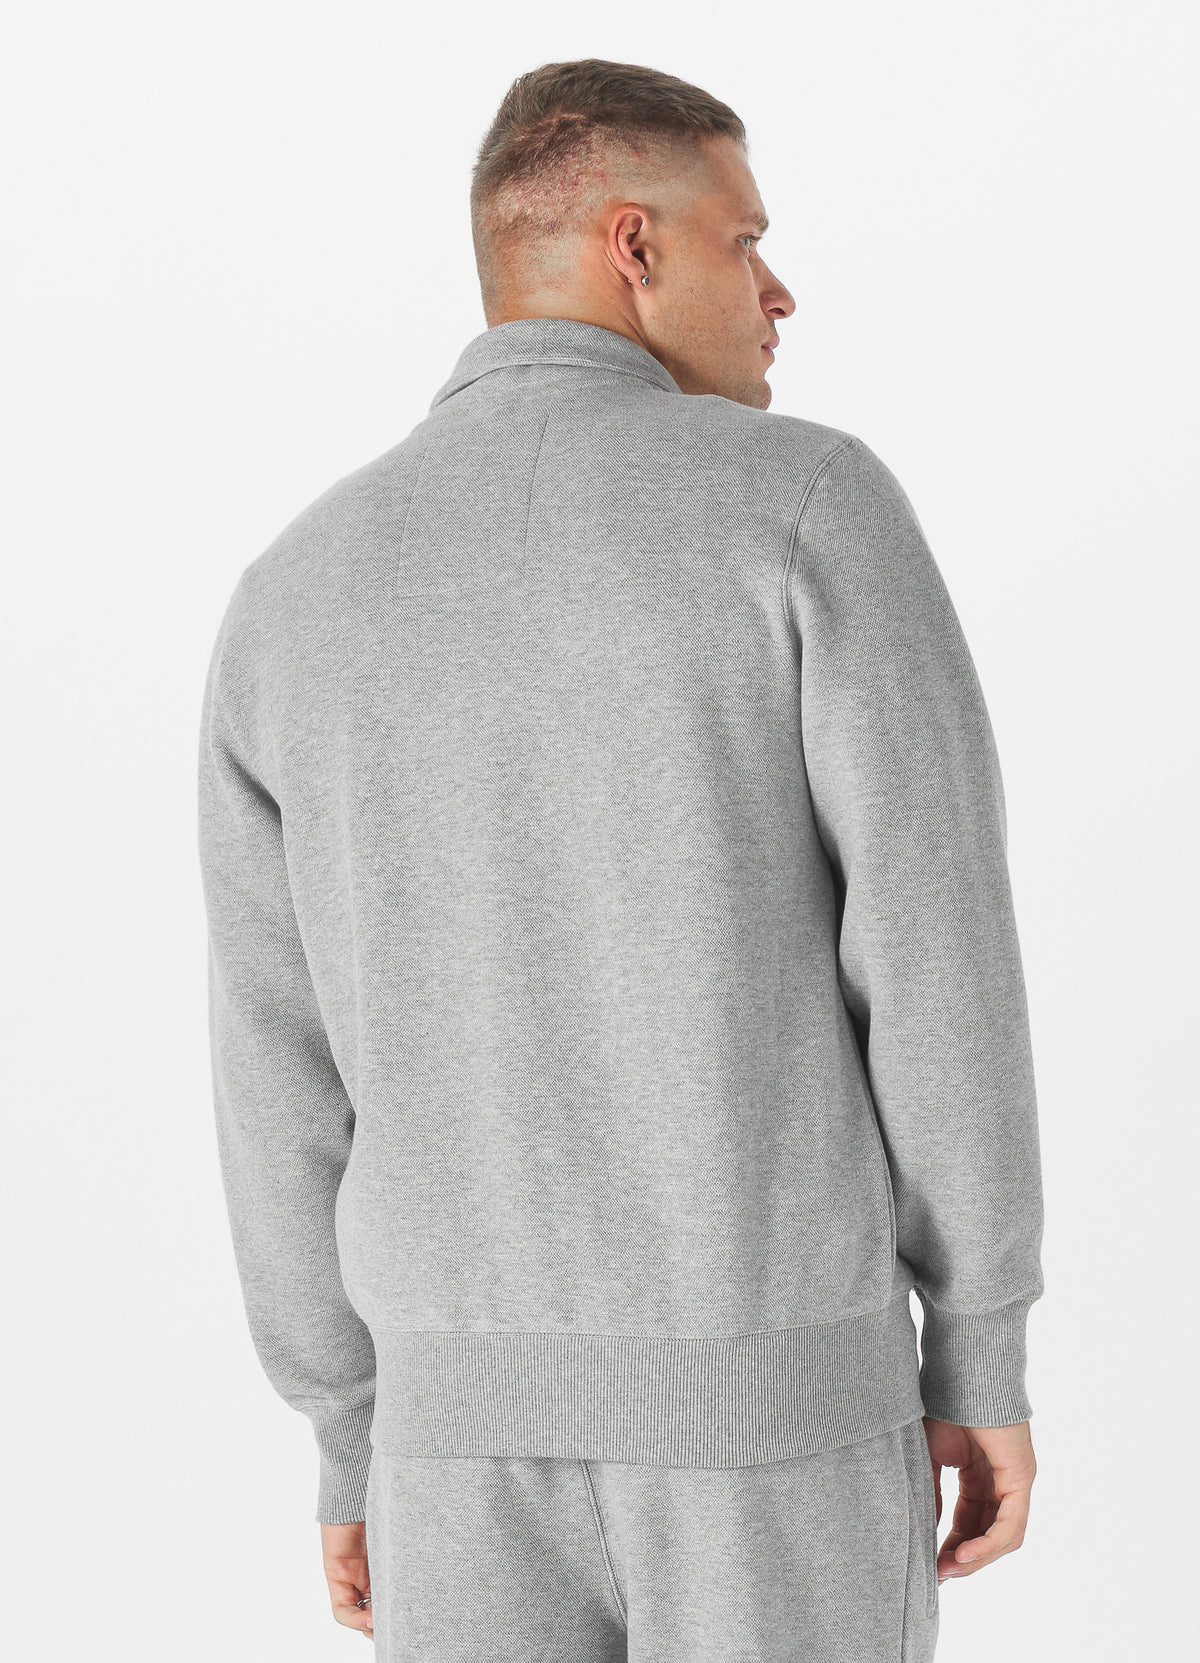 NEW LOGO Premium Pique Grey Sweatjacket - Pitbull West Coast International Store 